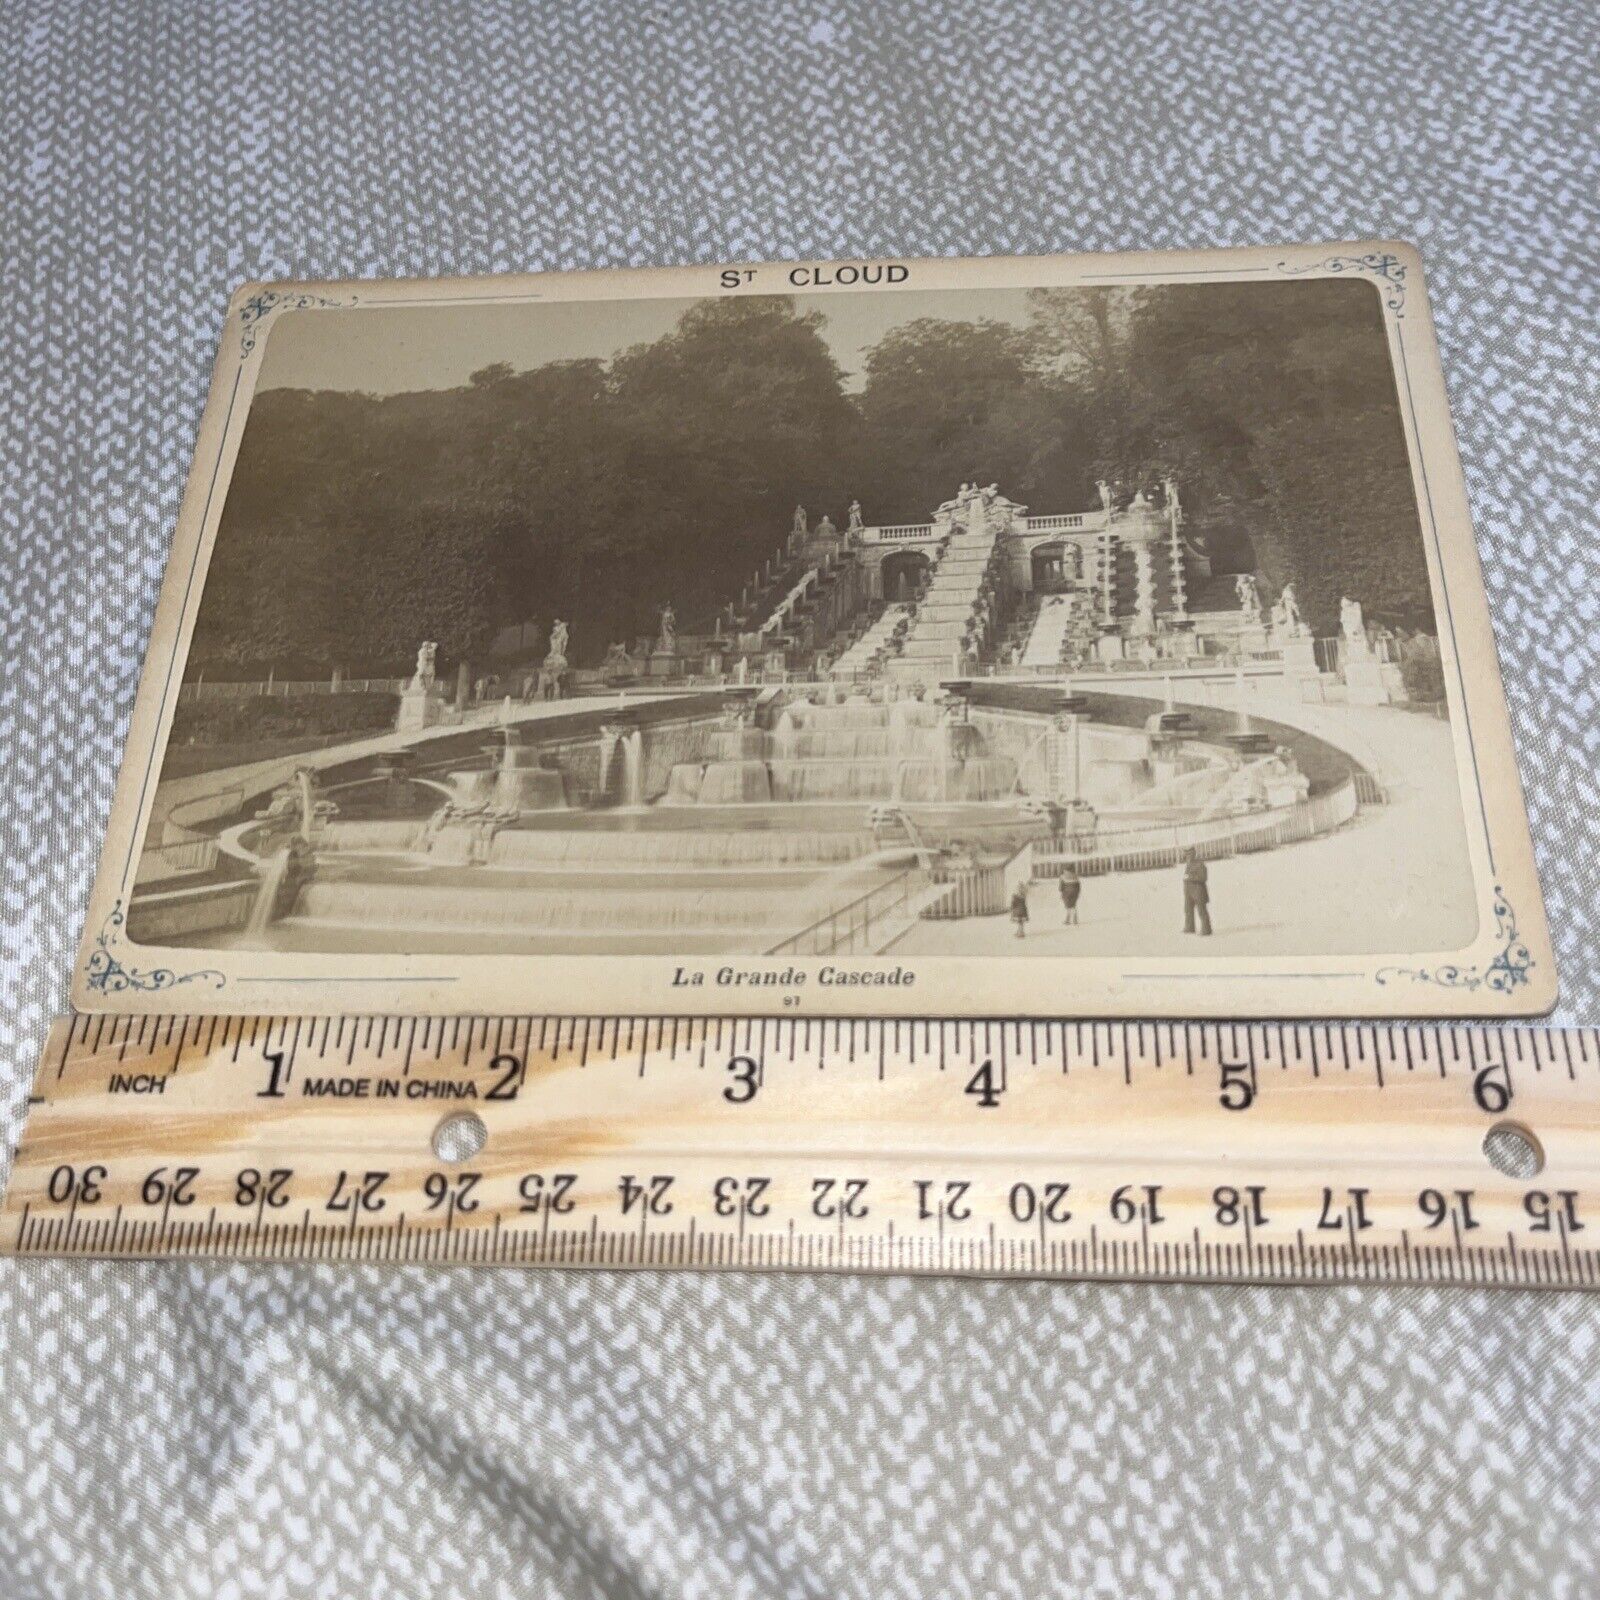 Antique Cabinet Card Albert Hautecœur Photo: St Cloud La Grande Cascade France